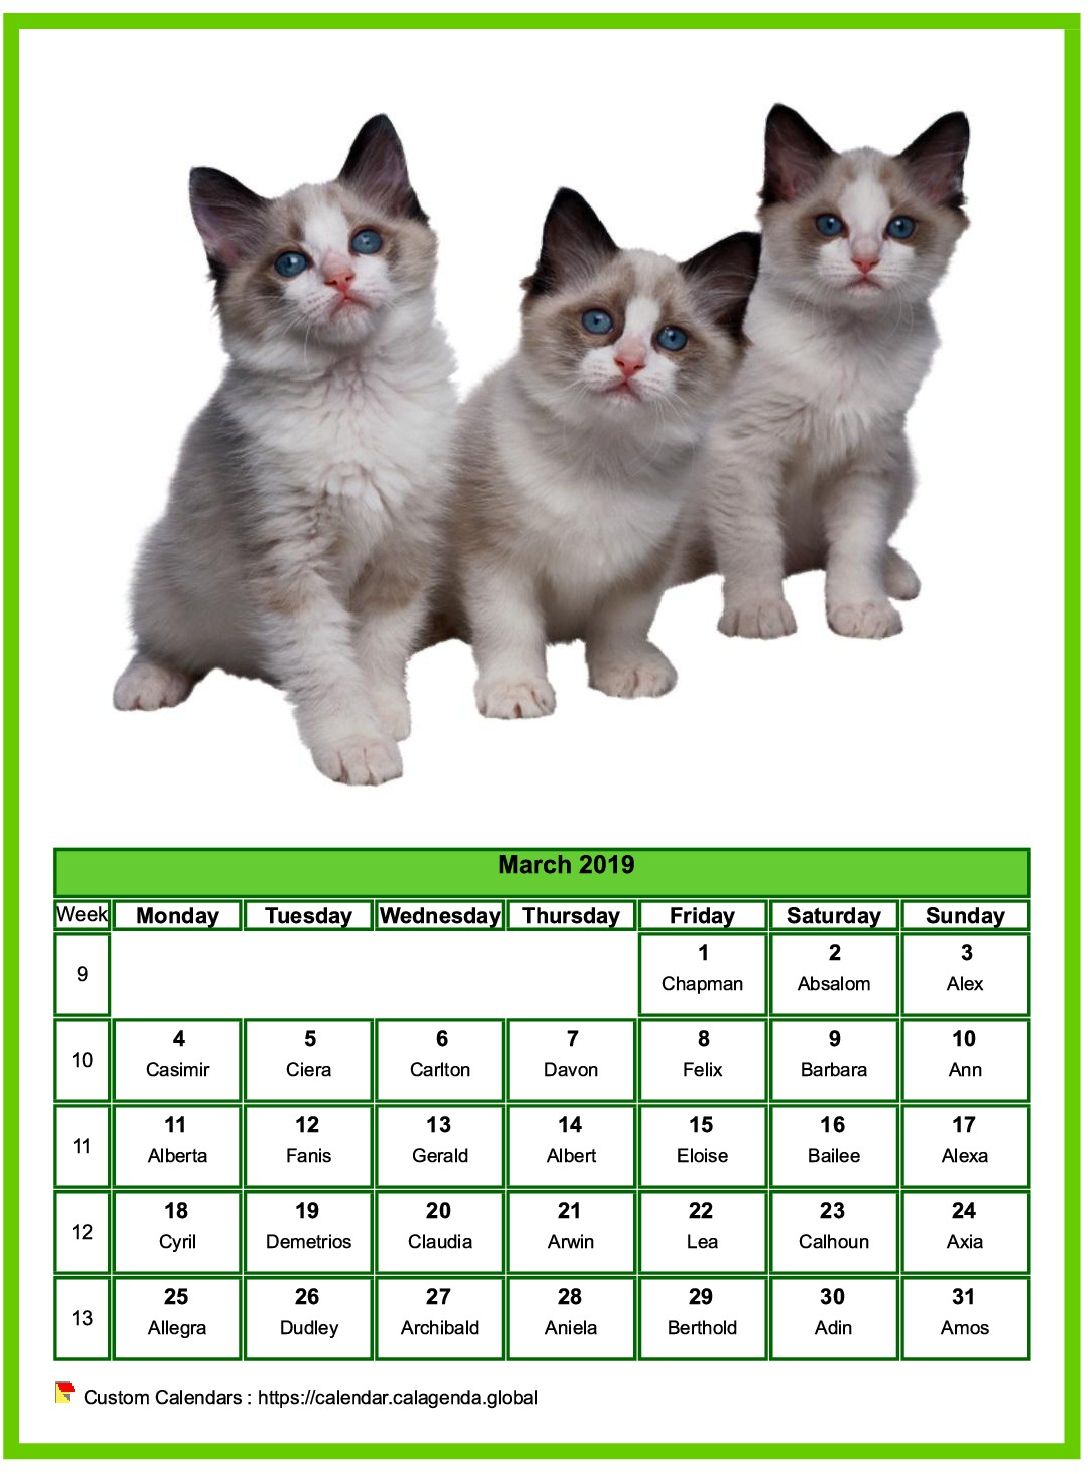 Calendar march 2019 cats